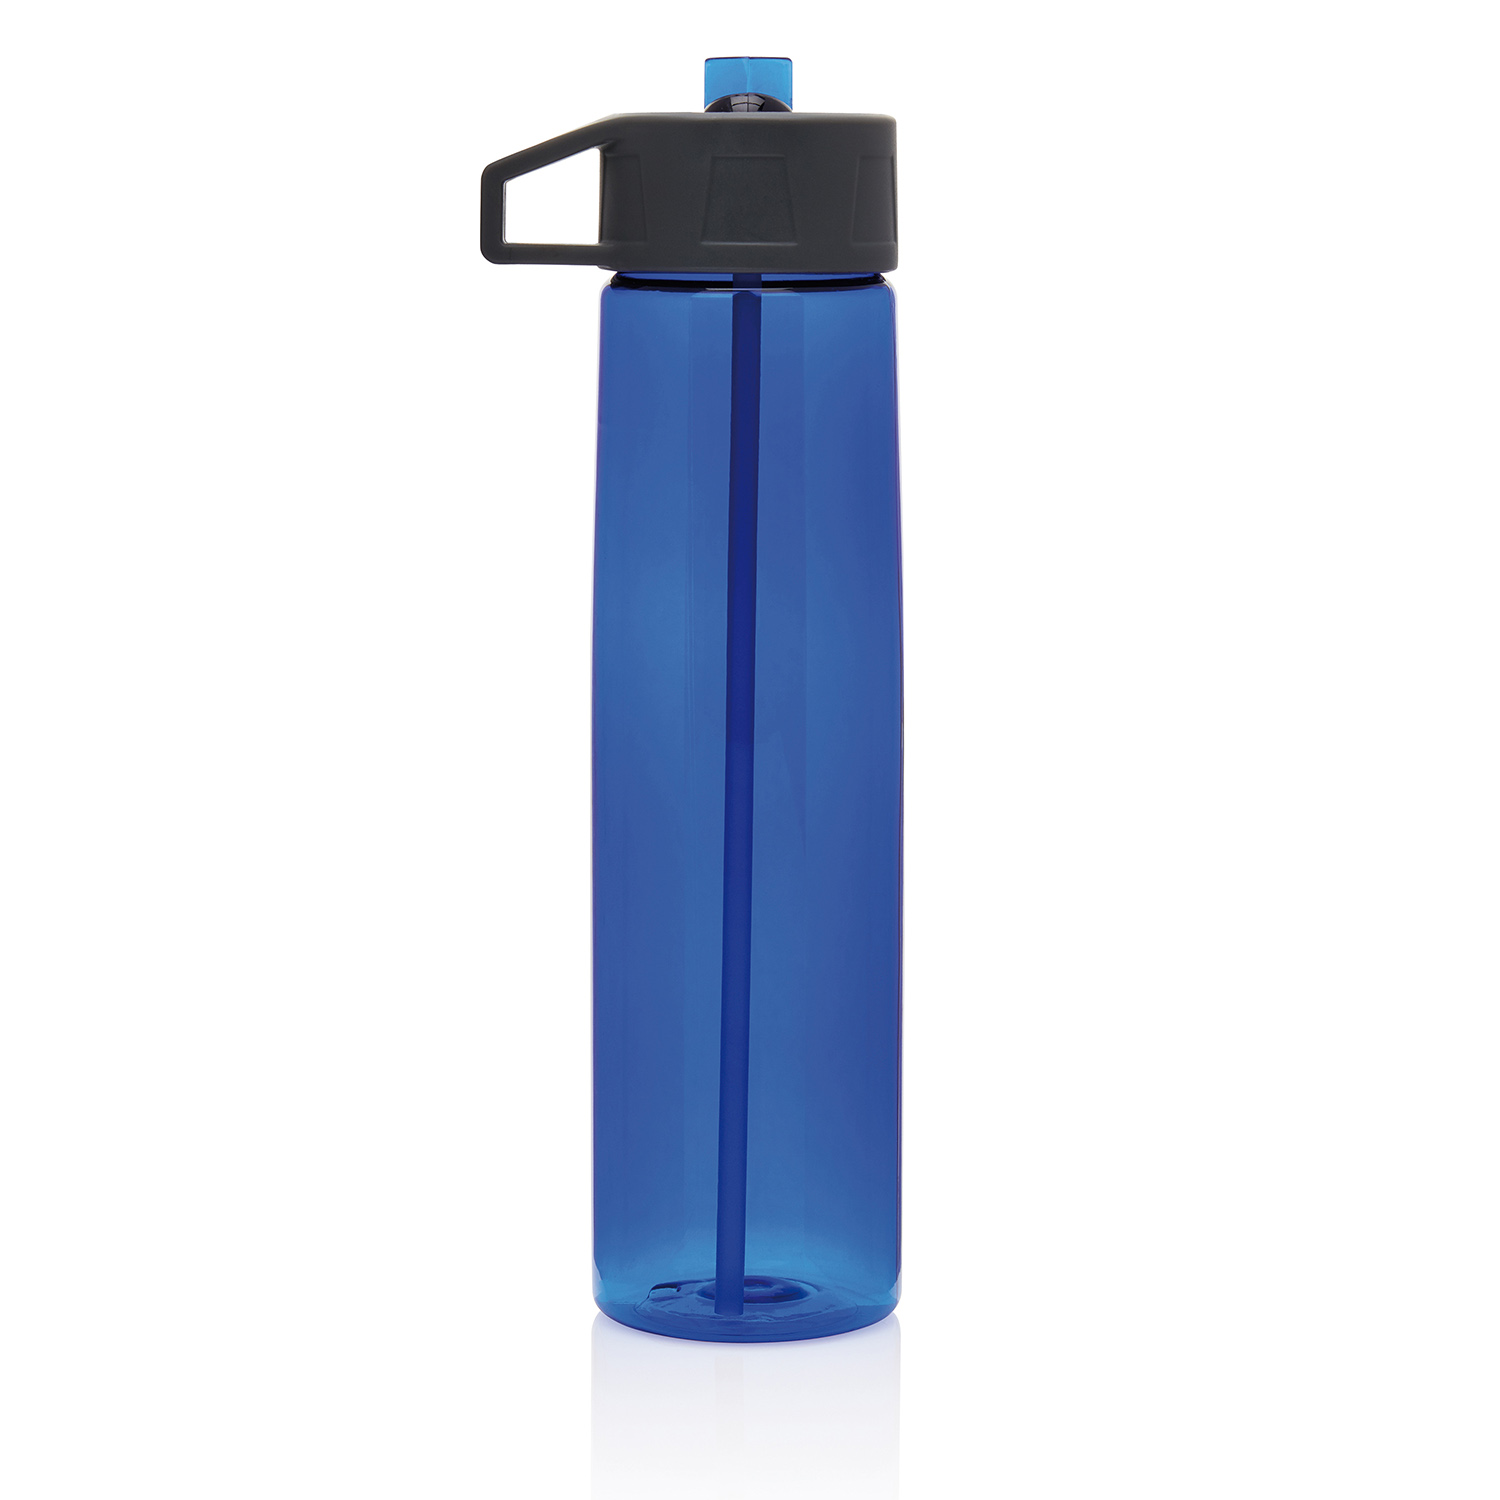 Тритан бутылка для воды. Tritan бутылка для воды. Бутылка спортивная для воды Tritan. Материал Тритан для бутылки. Бутылка для воды 750ml xdfls202.